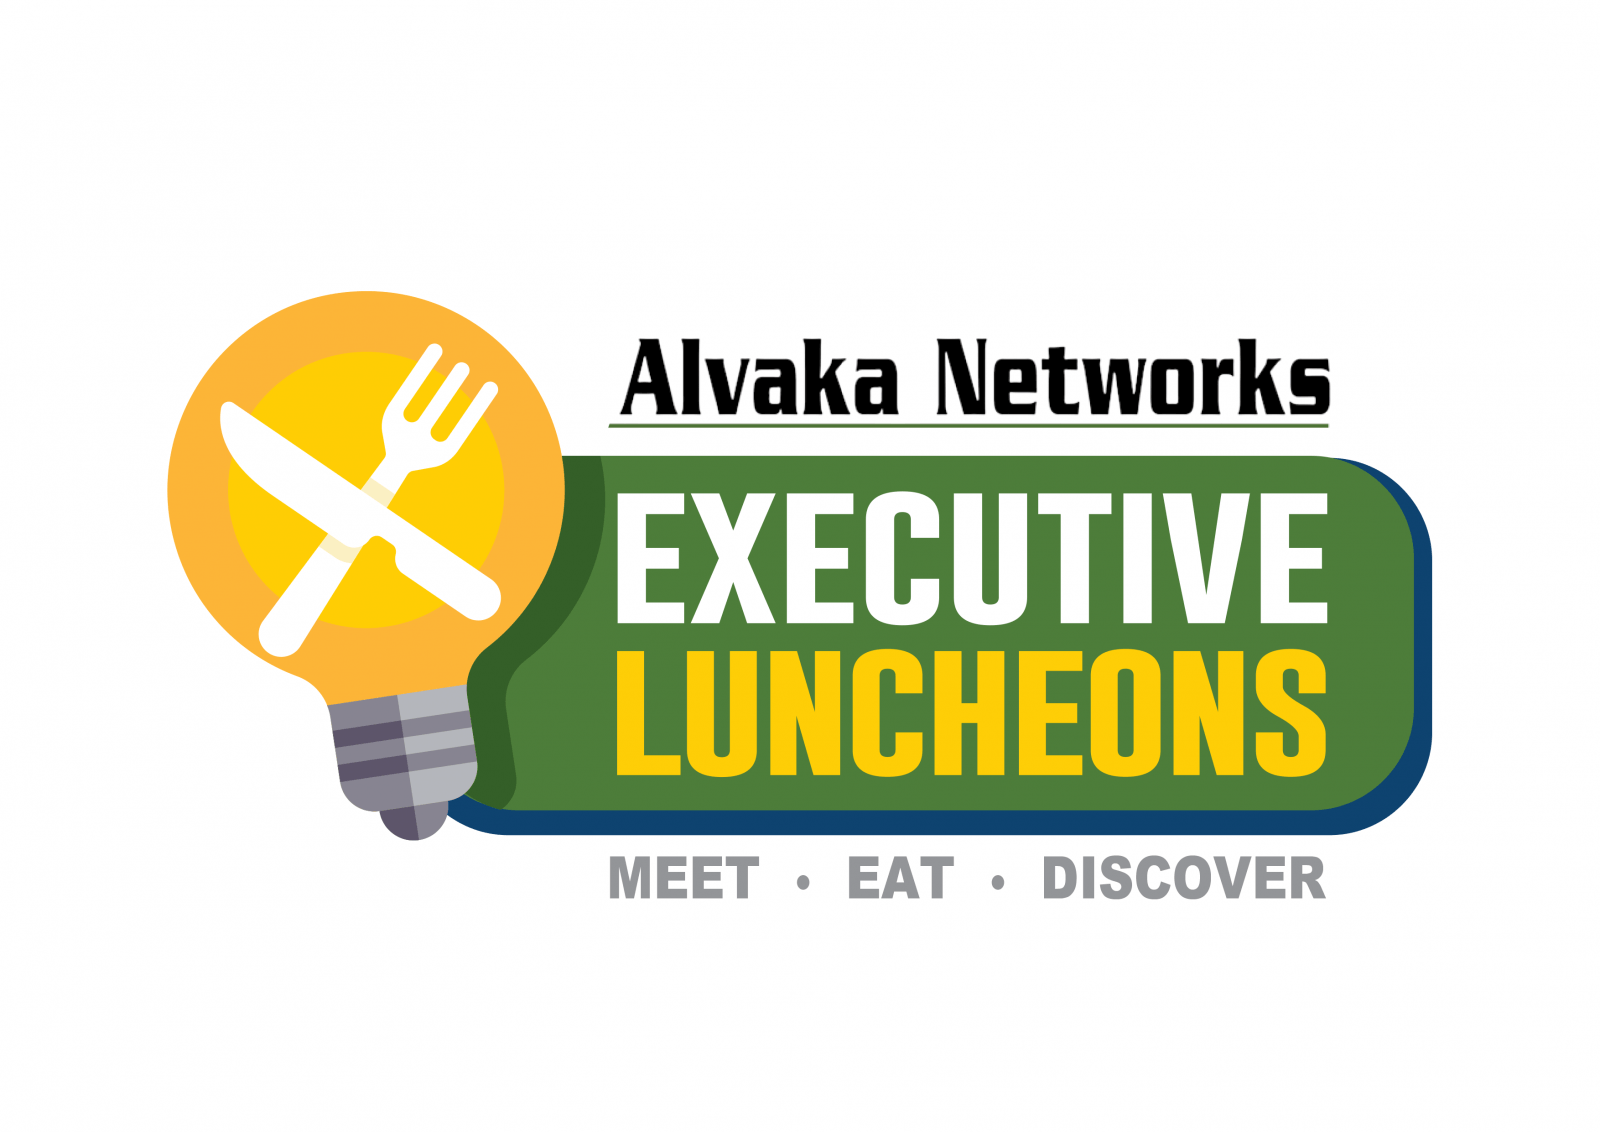 Luncheon Logo - ALV - Executive Luncheon Logo - Alvaka Networks